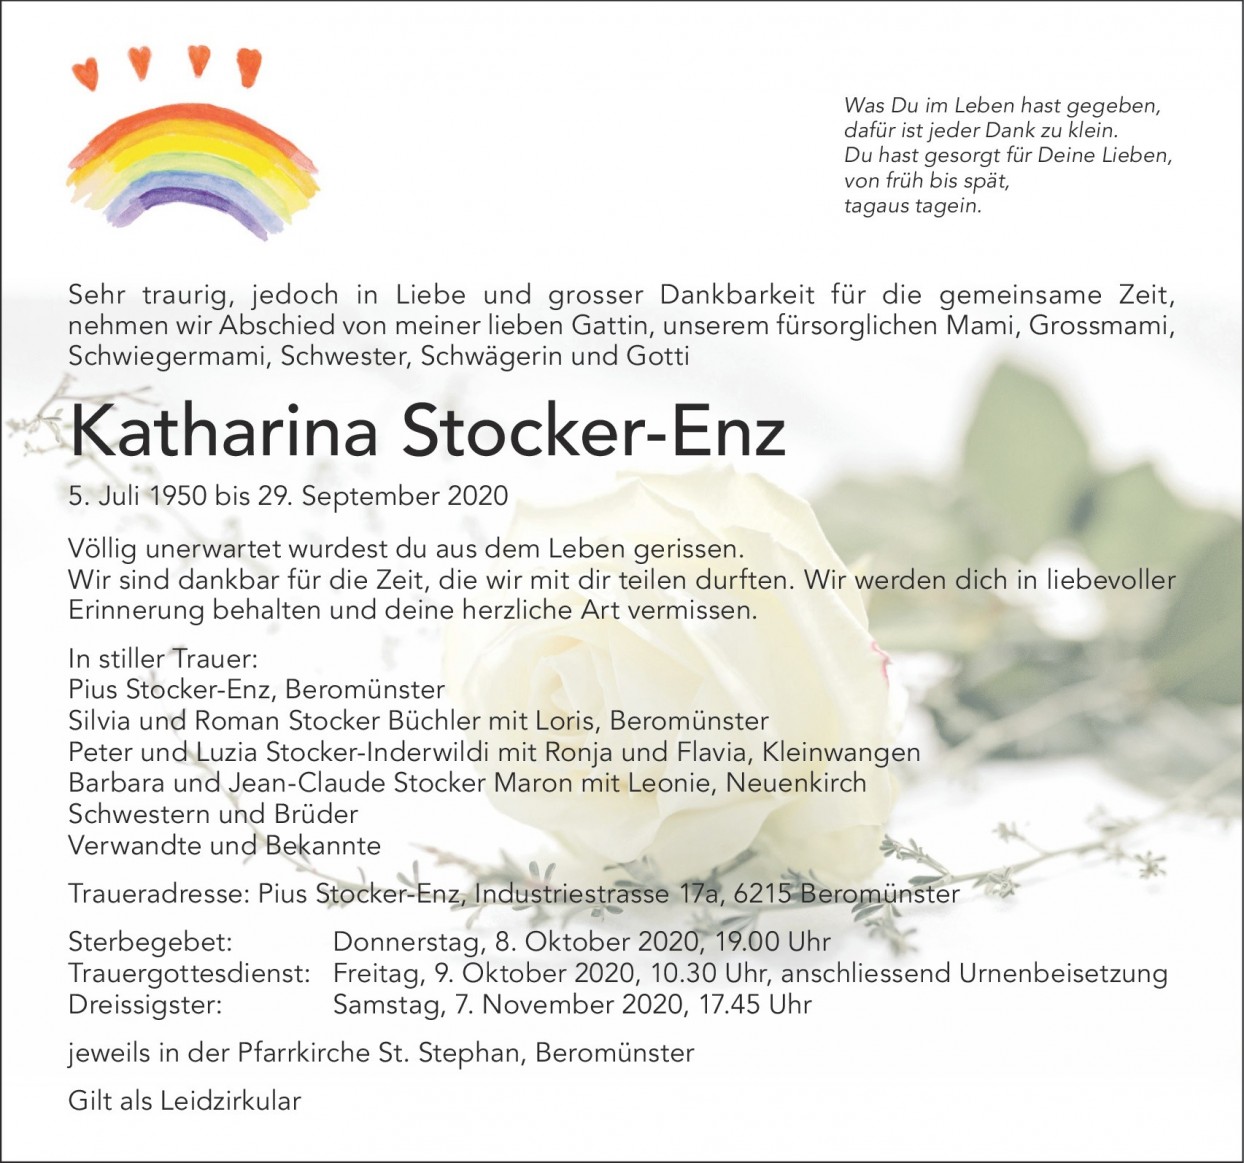 Katharina Stocker-Enz